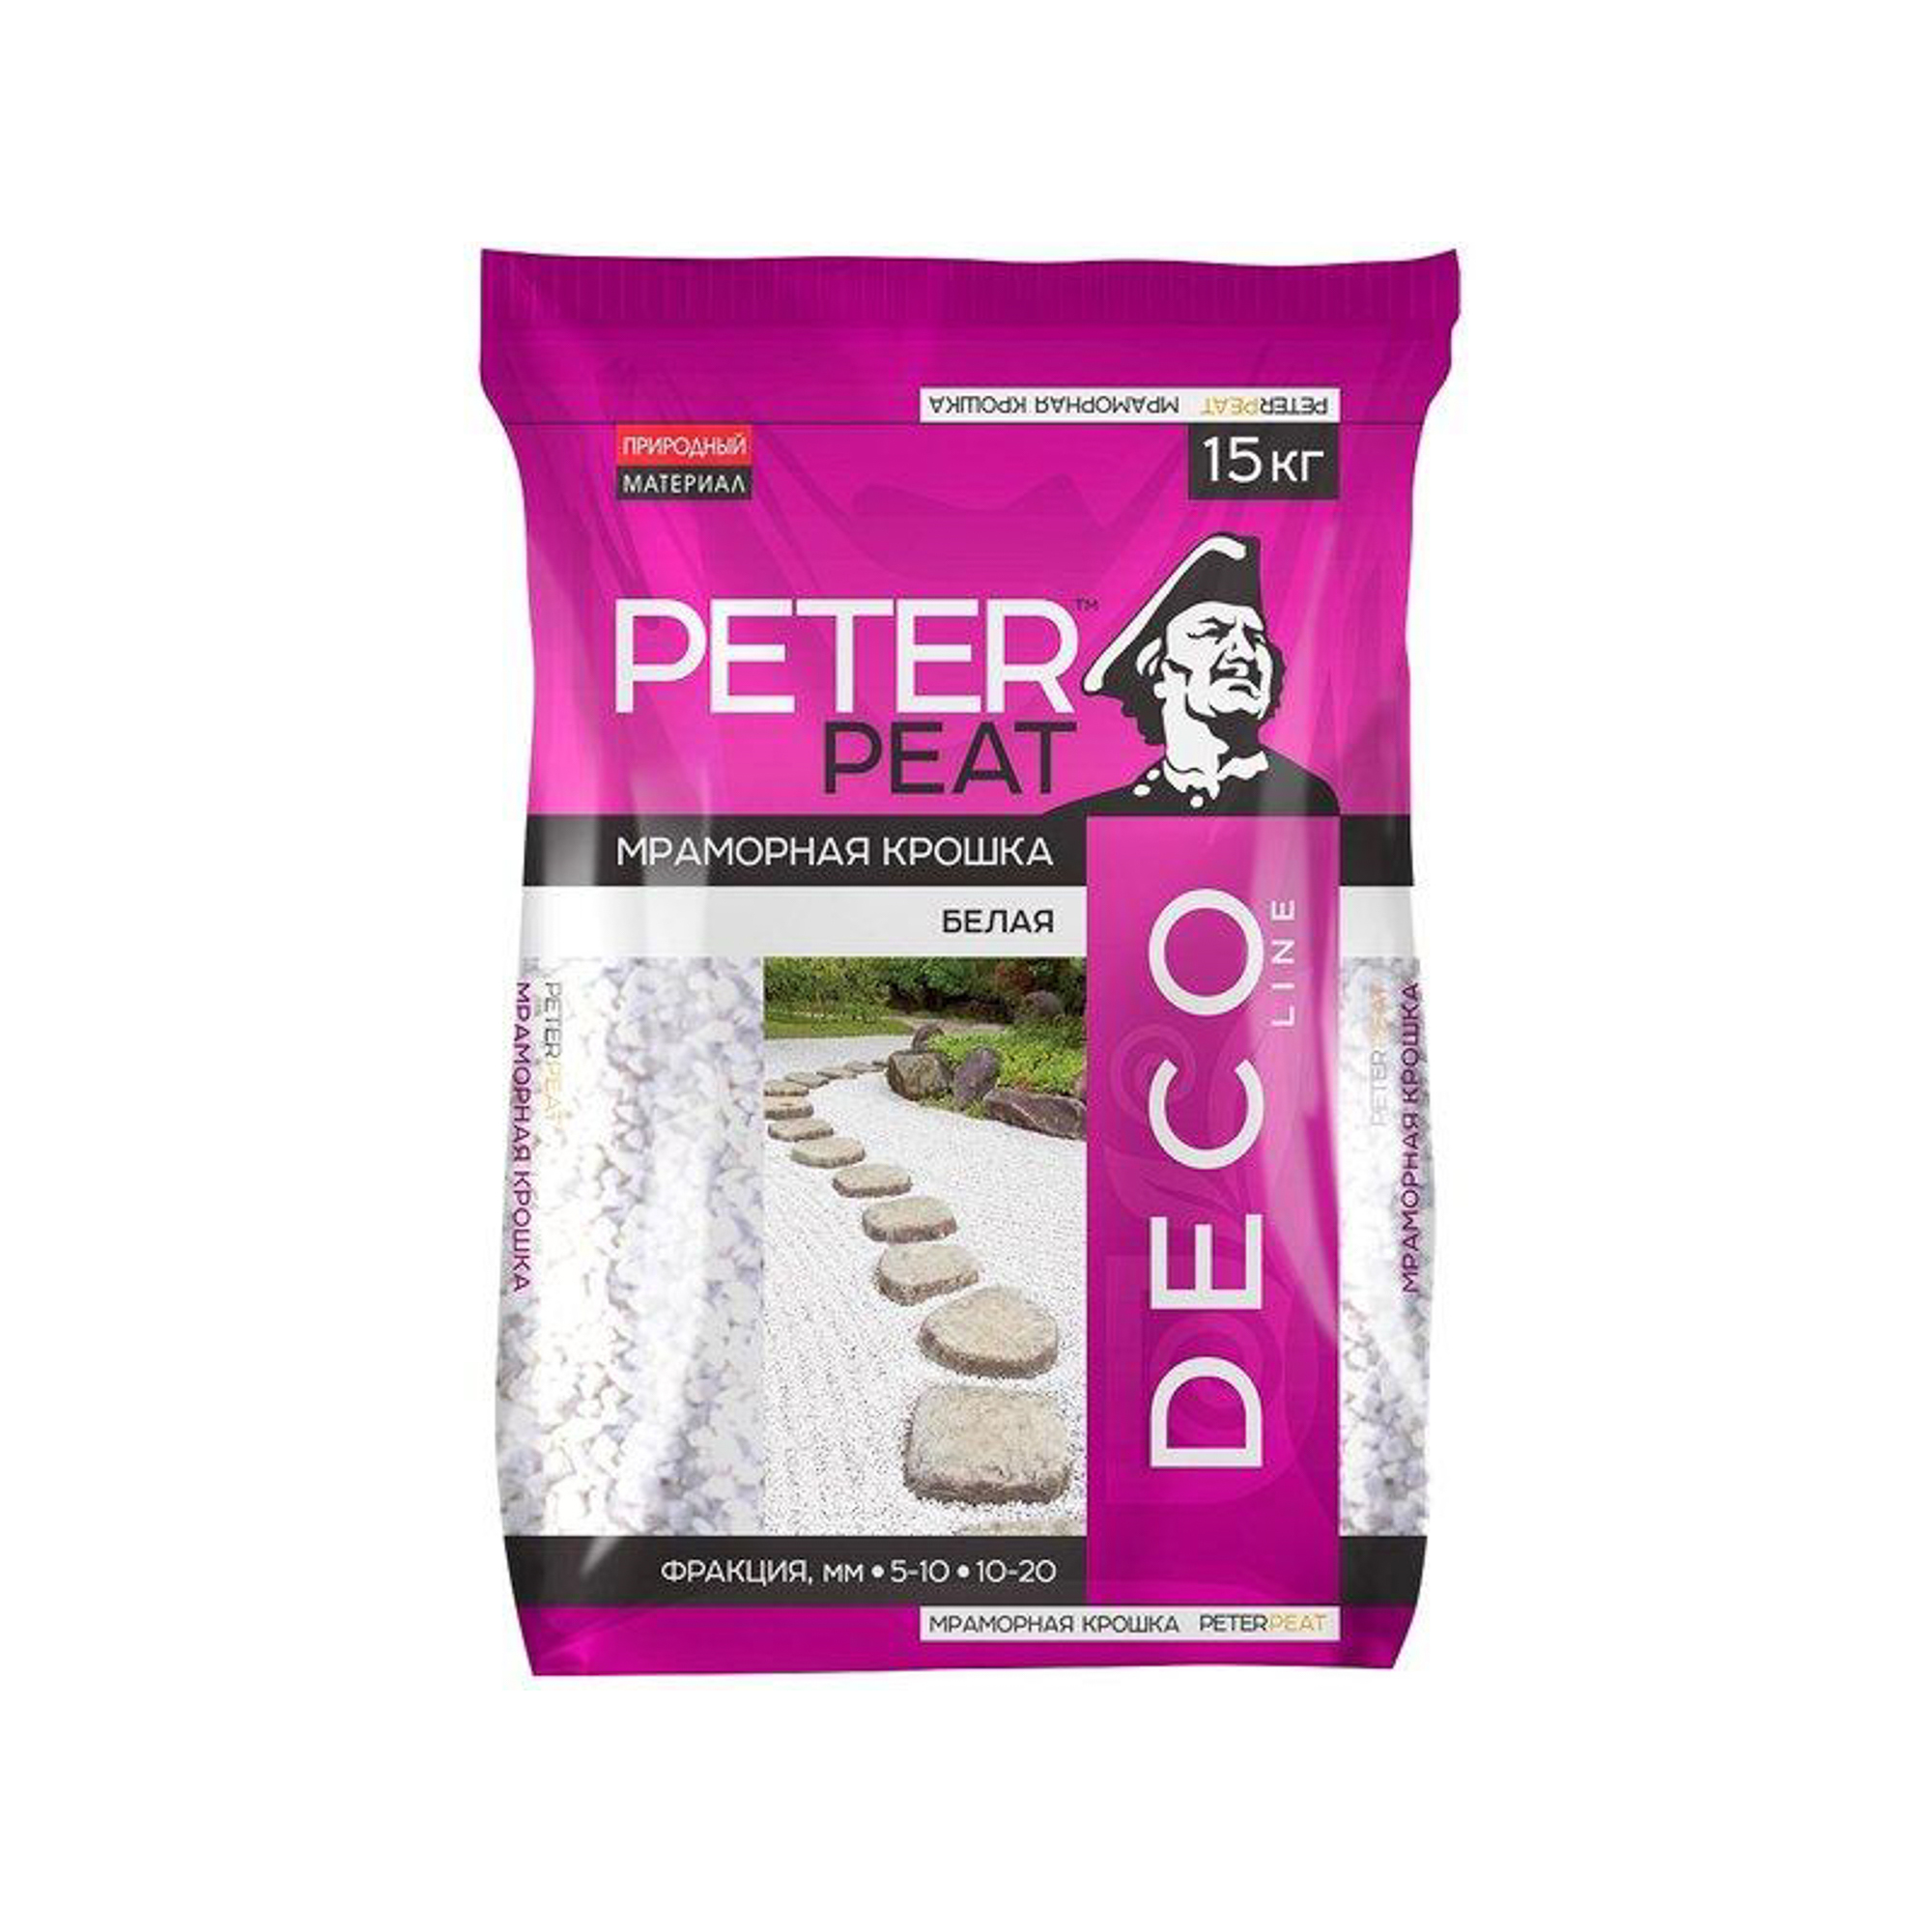 мраморная крошка peter peat светло серая фр 5 10 мм линия вита 15 кг Крошка мраморная белая 15 кг 5-10 мм Peter Peat